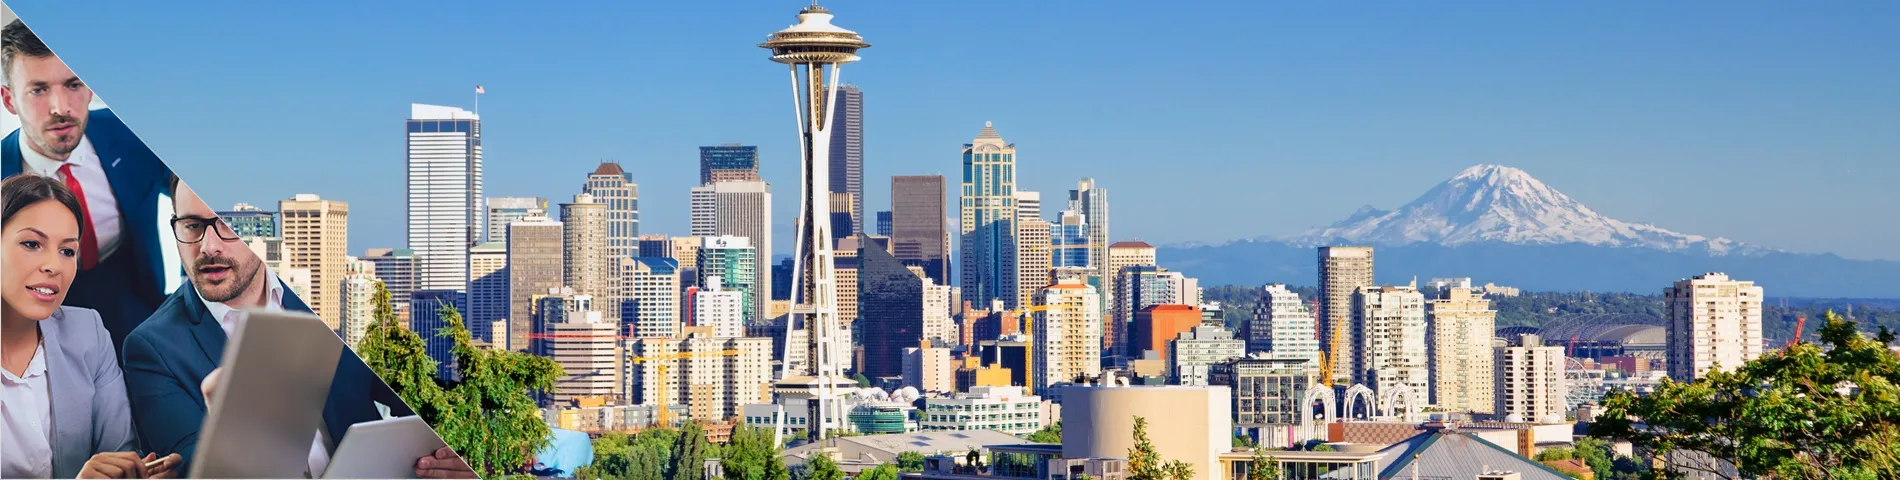 Seattle - Grup Combinat: Estàndard i Negocis  